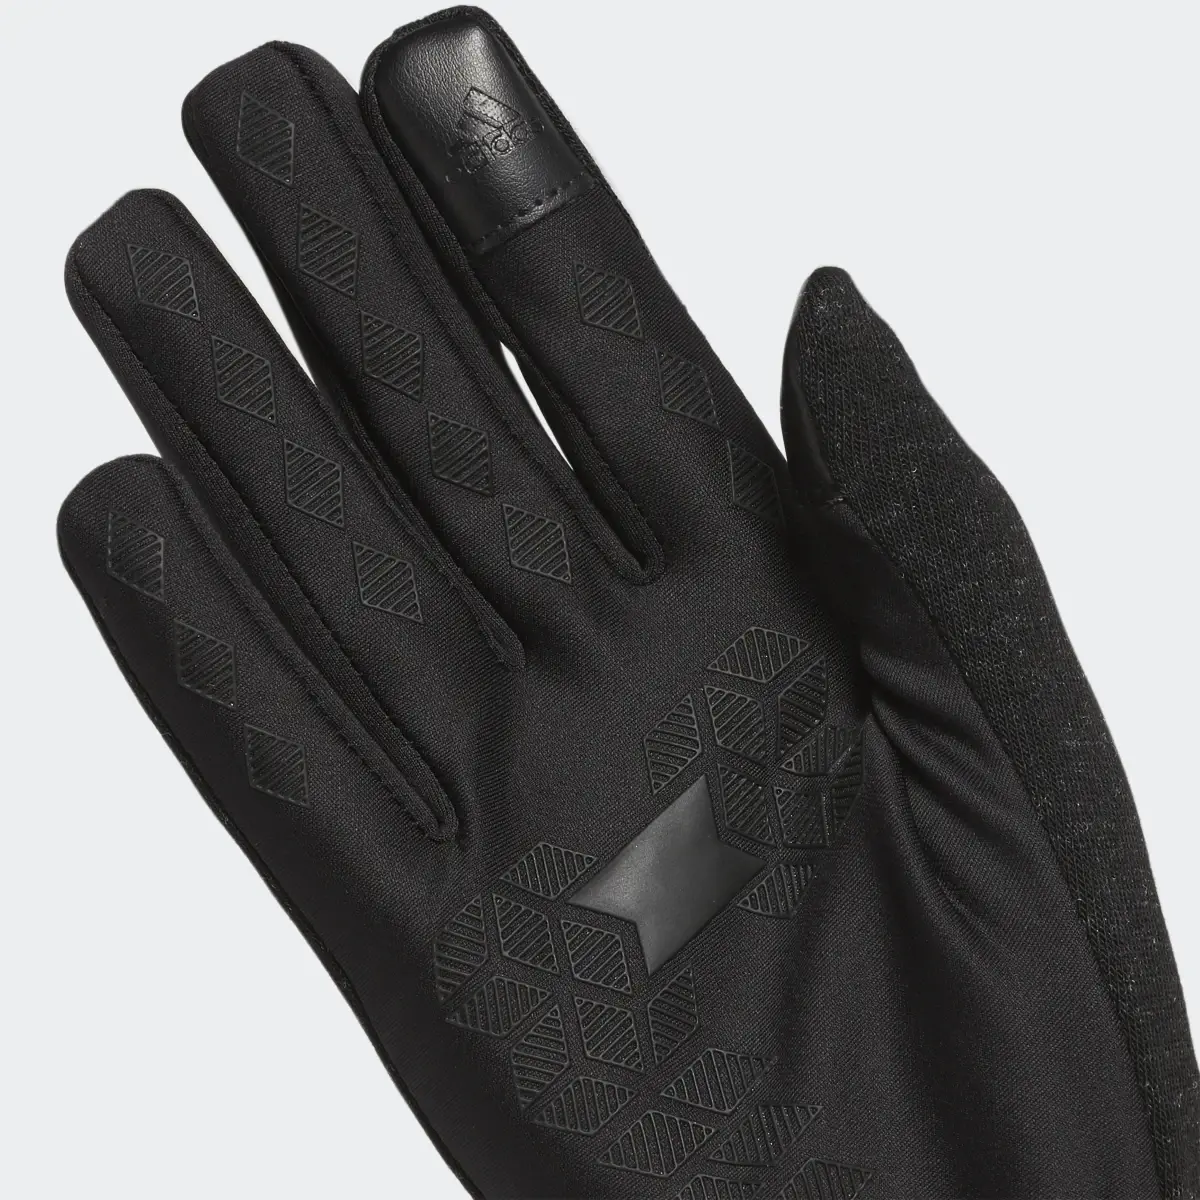 Adidas Edge Gloves. 2